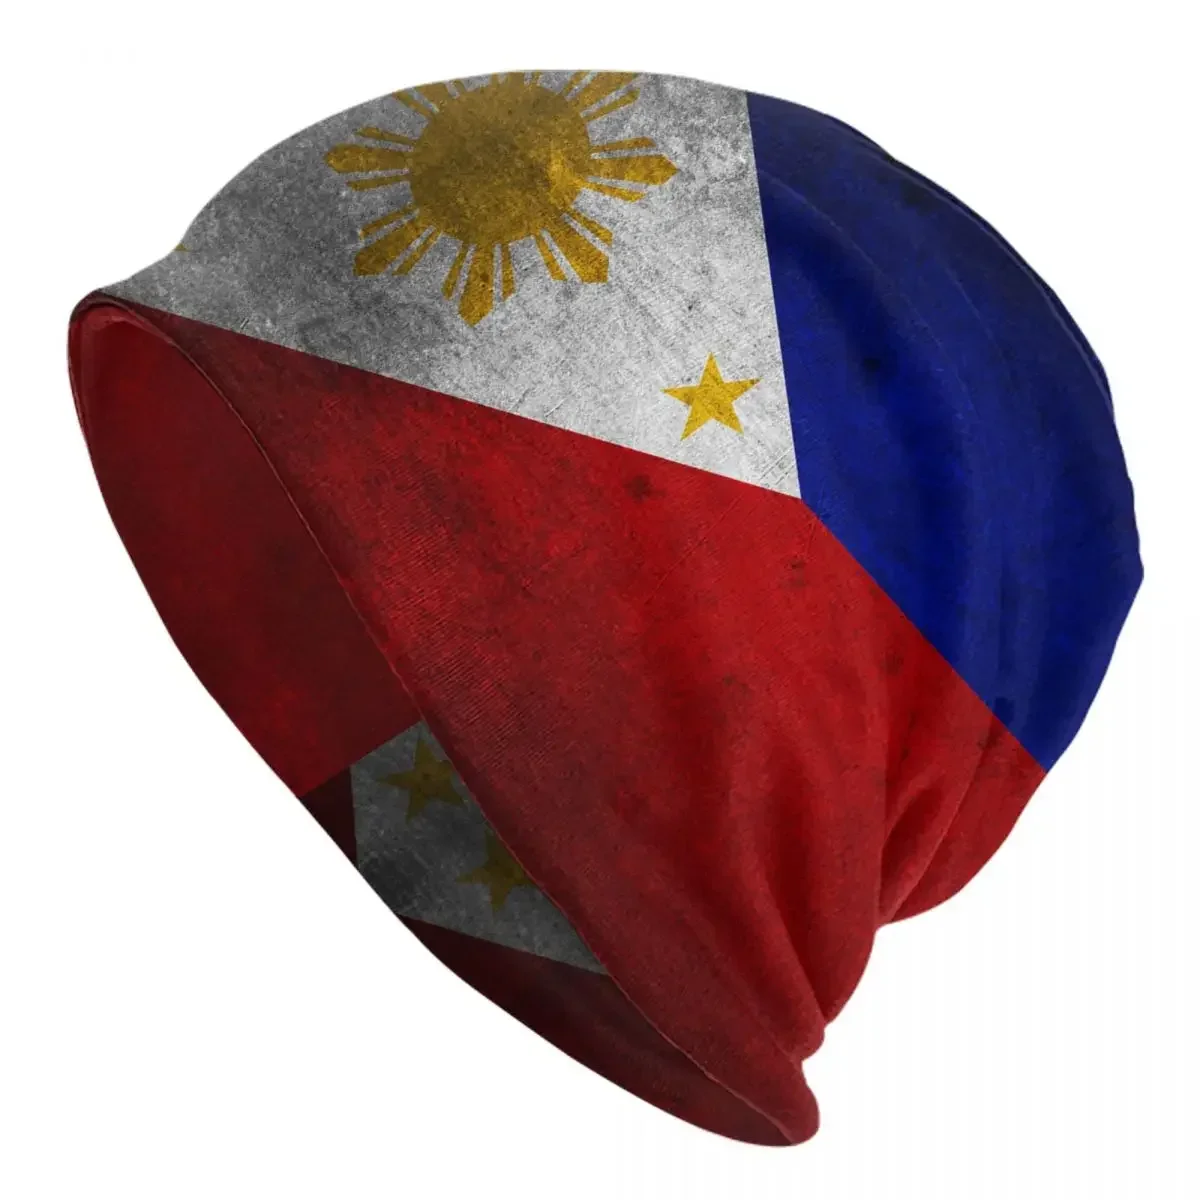 

Шапка-бини трикотажная унисекс, с флагом Филиппин